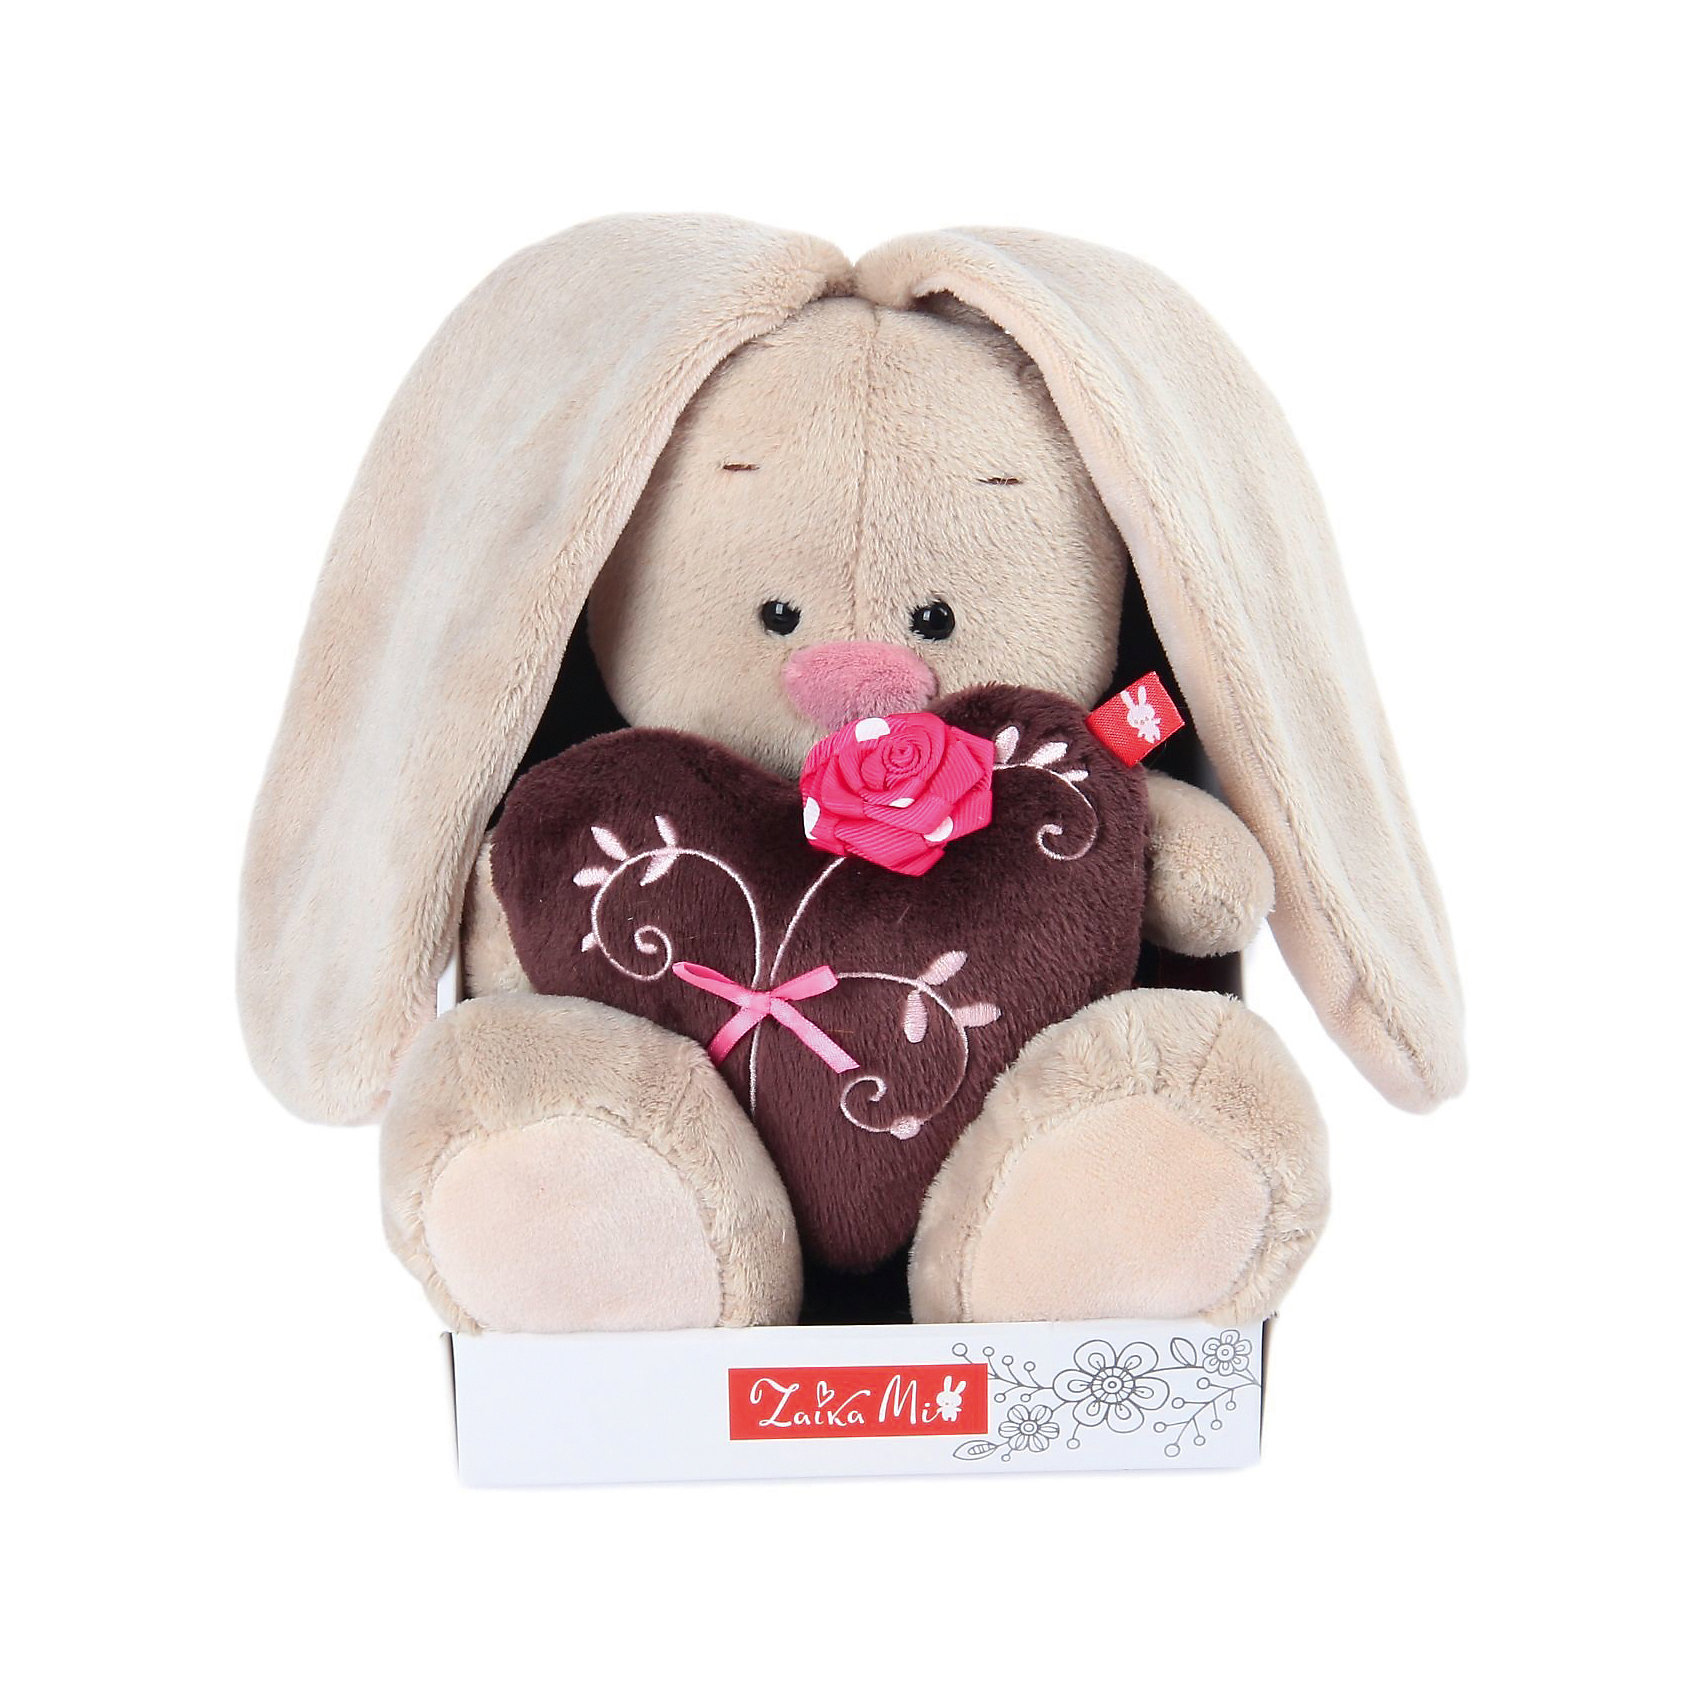 Toy 22. Budi basa Зайка ми. Budi basa кролик. Мягкая игрушка "Зайка" 20 см, цвет коричневый 7619863. Зайка 718096/f807.